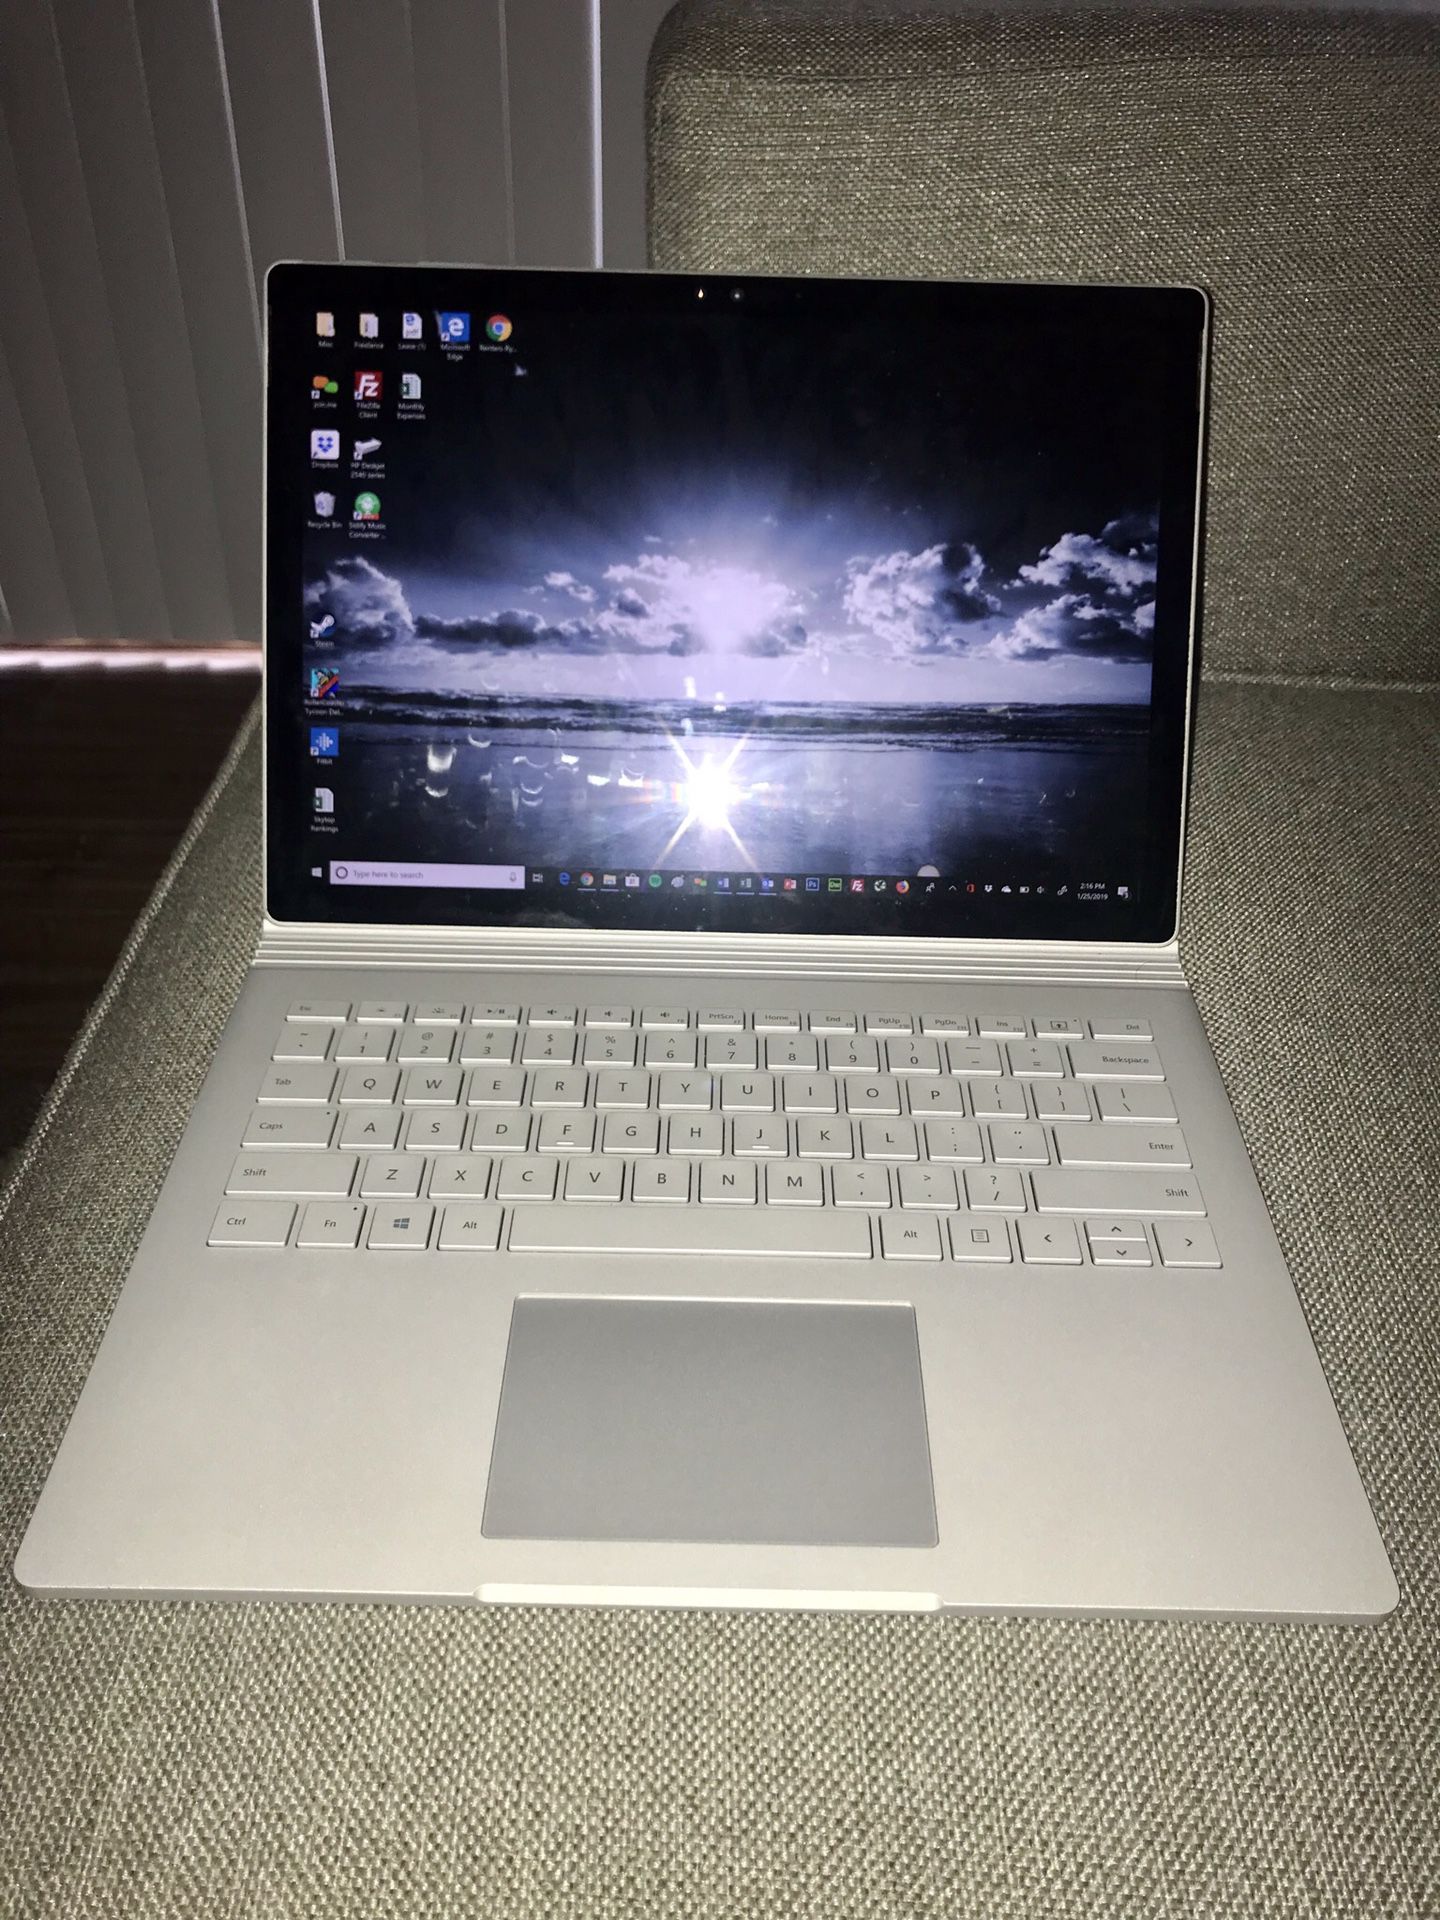 Microsoft Surface Book 2-in-1 Laptop (1st Gen)